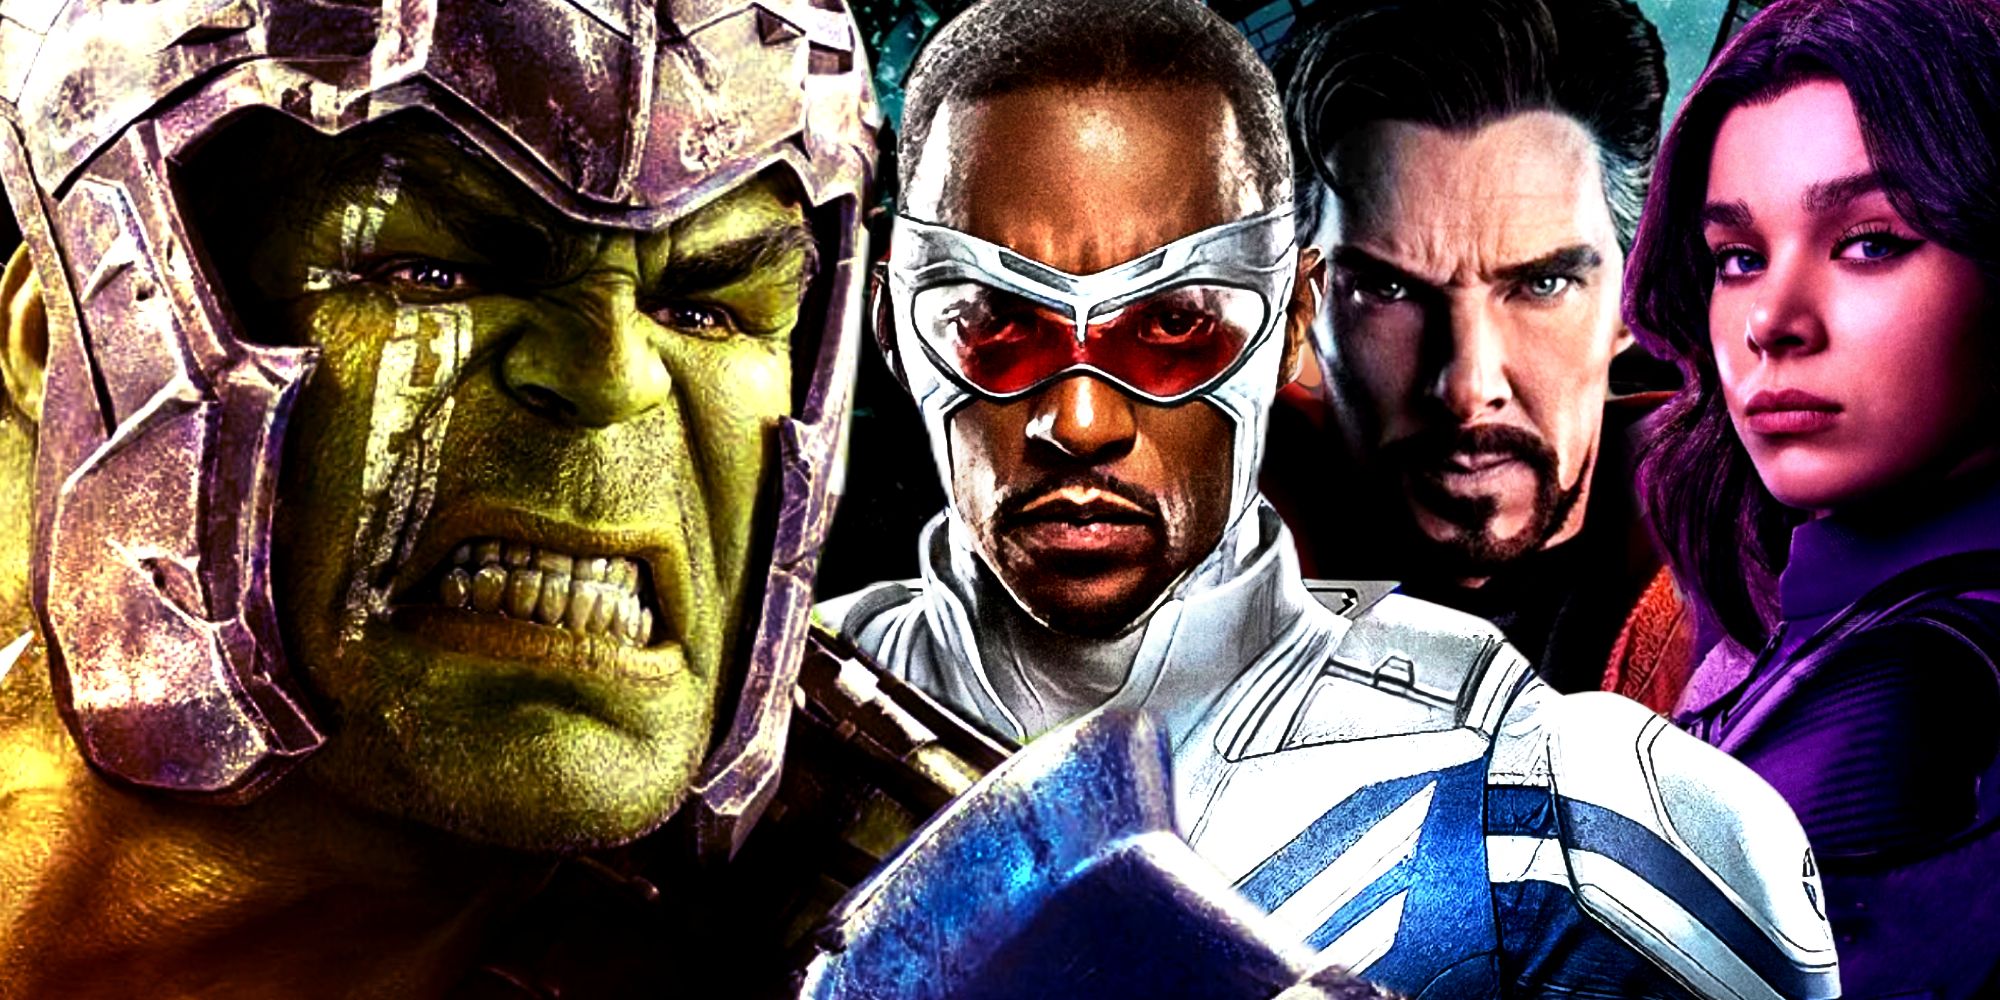 Gladiator Hulk in Thor Ragnarok with Avengers Captain America, Doctor Strange, and Kate Bishop